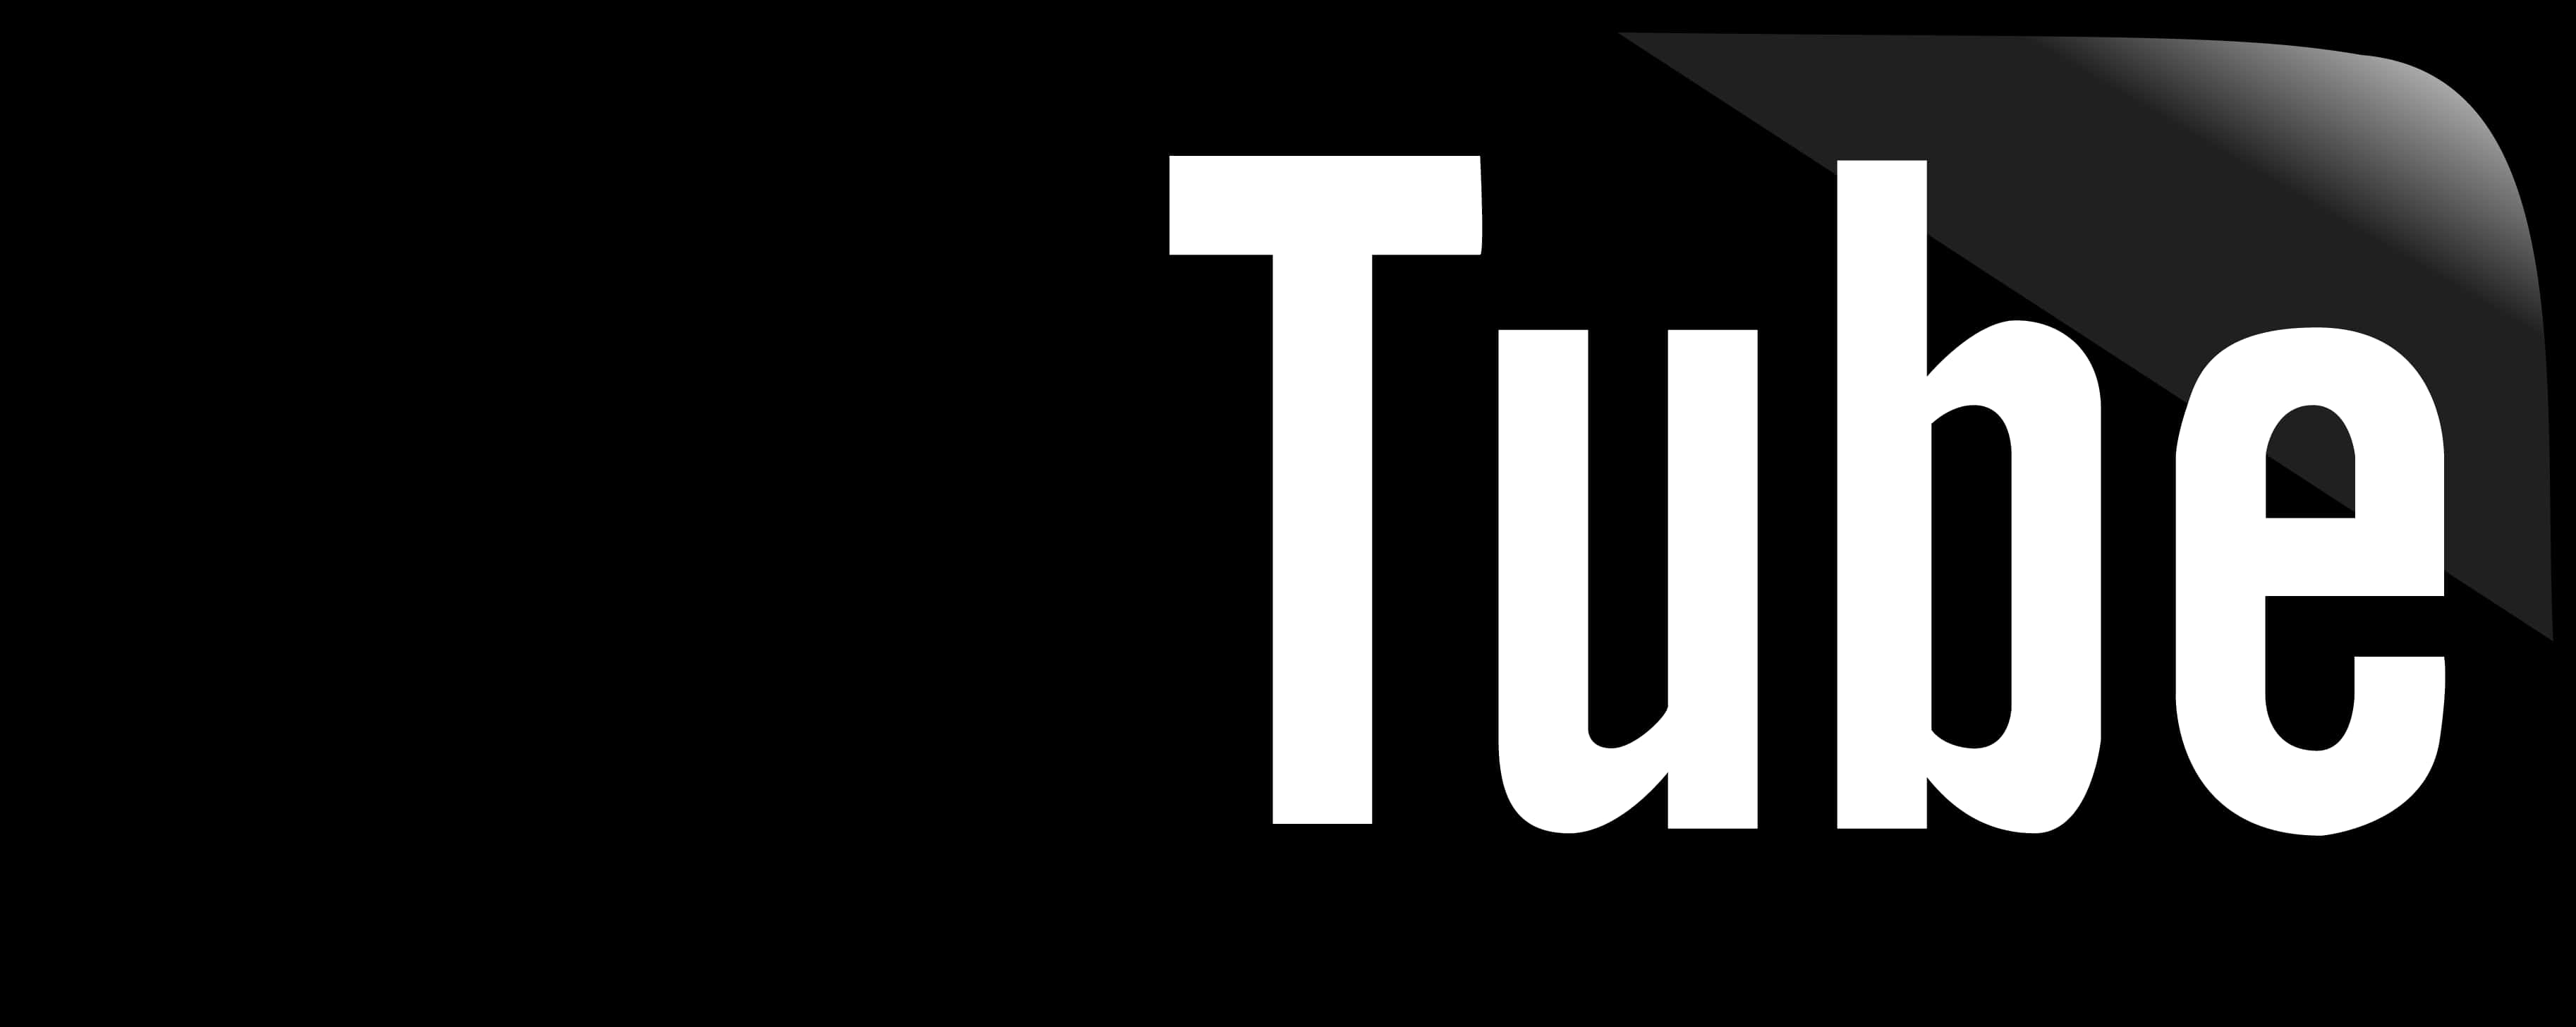 Black You Tube Logo PNG